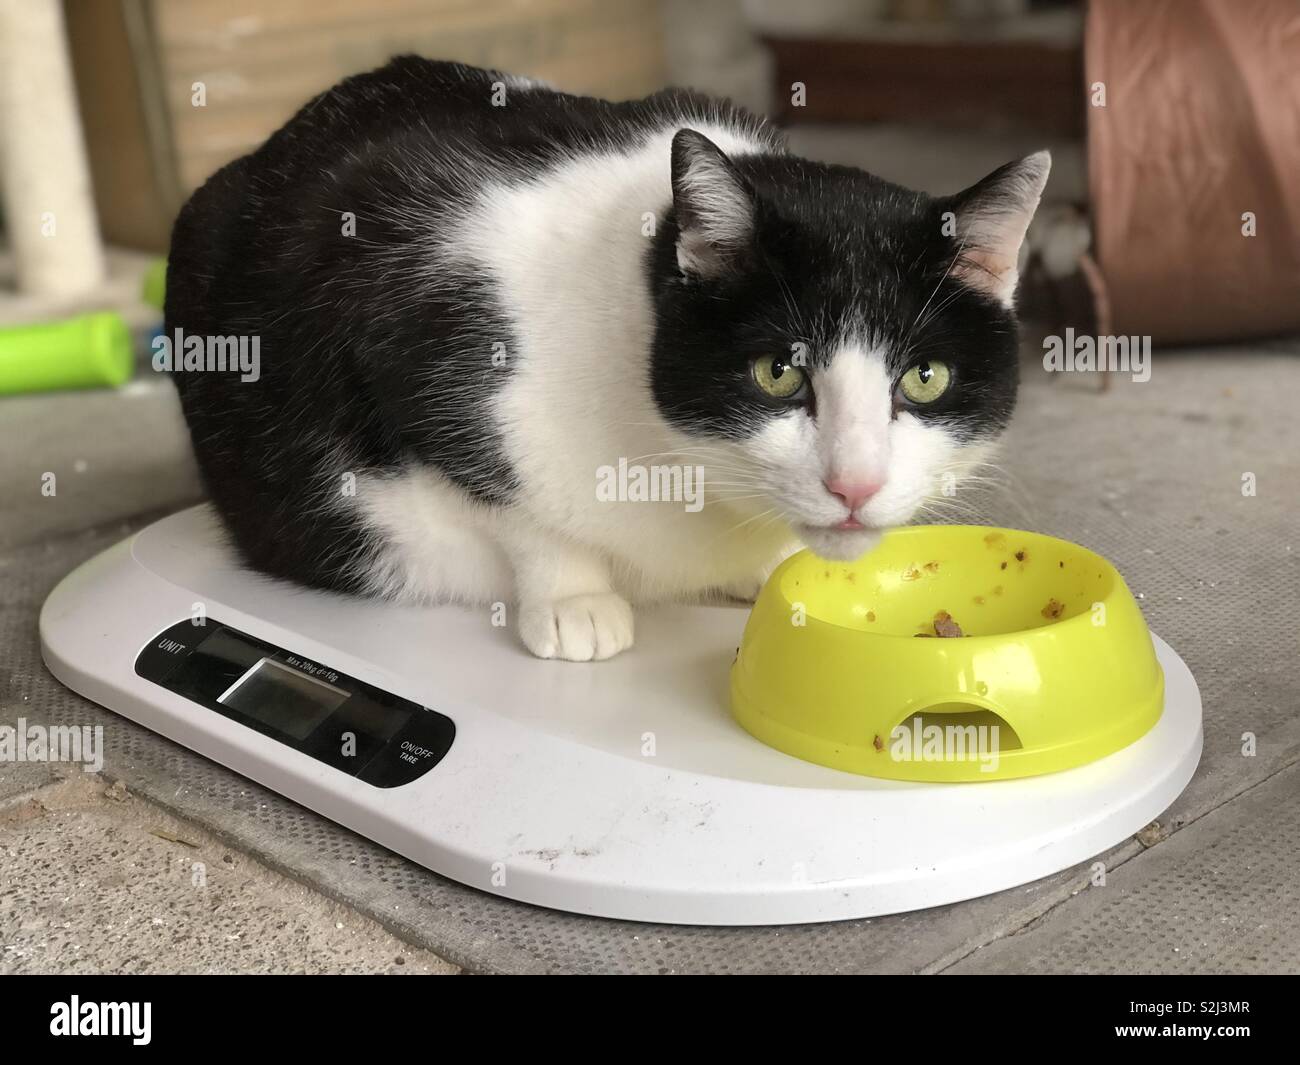 https://c8.alamy.com/comp/S2J3MR/fat-cat-on-scales-S2J3MR.jpg